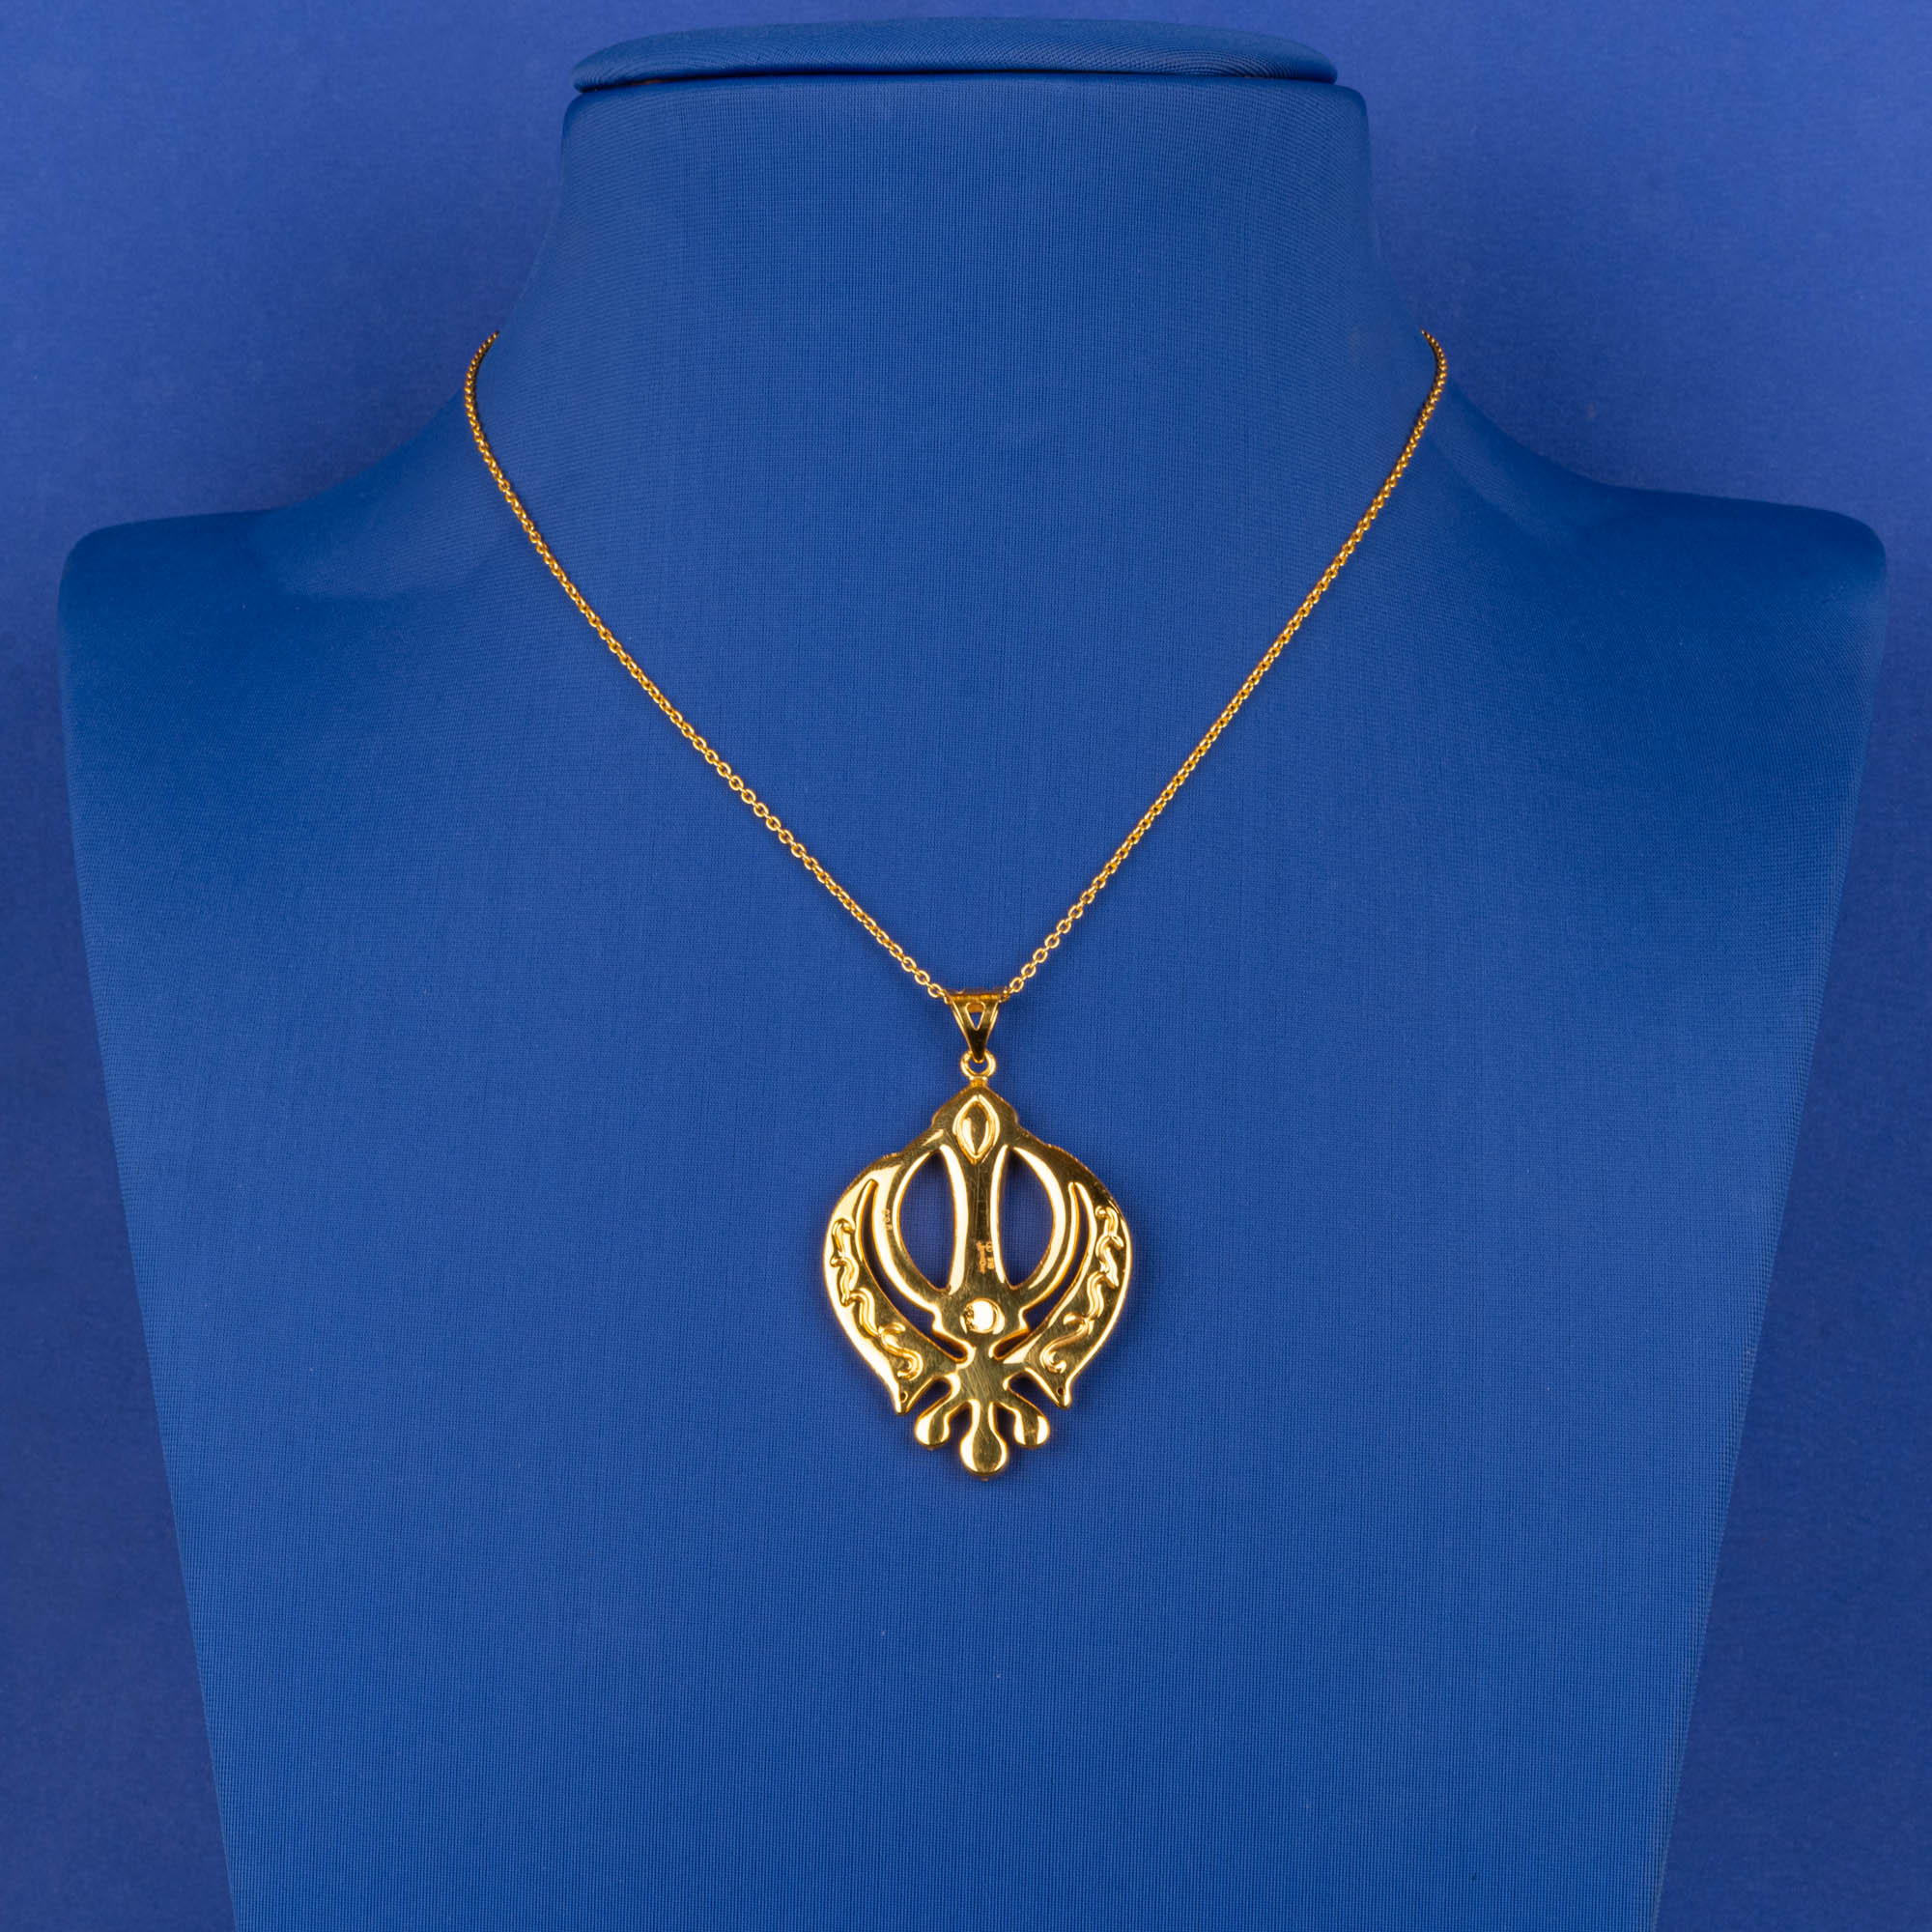 Enchanting Aura: Handmade 22K Yellow Gold Sikh Khanda Pendant with Captivating Design (chain not included)